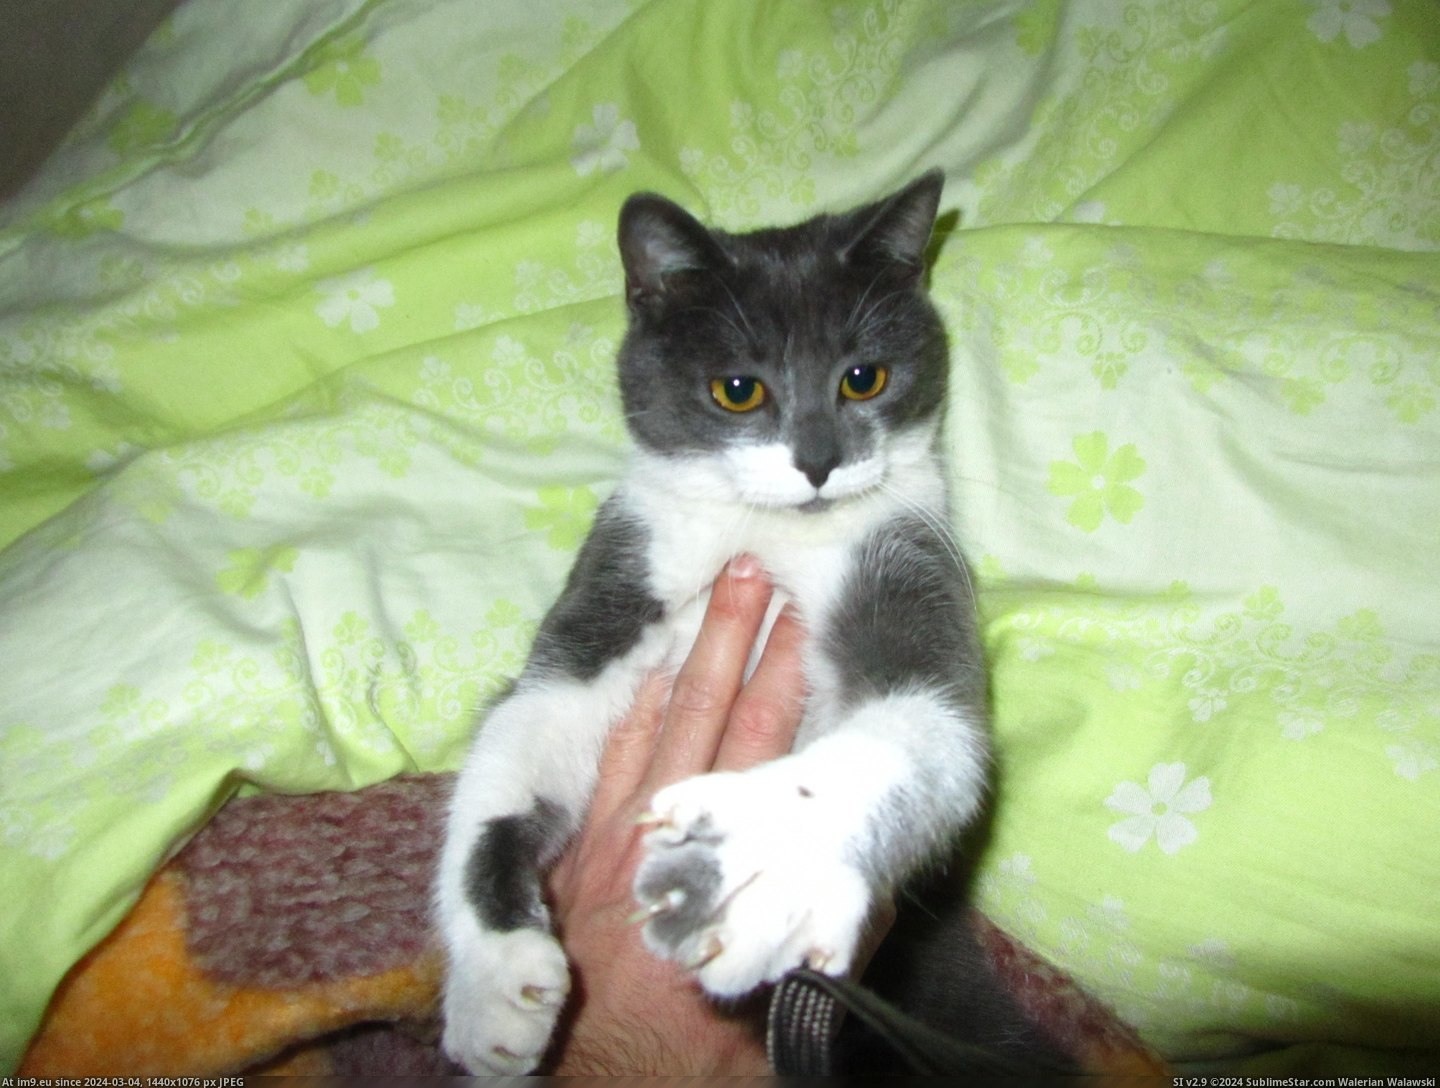 #Cats #Viki #Meet [Cats] Reddit, meet Viki. Pic. (Bild von album My r/CATS favs))